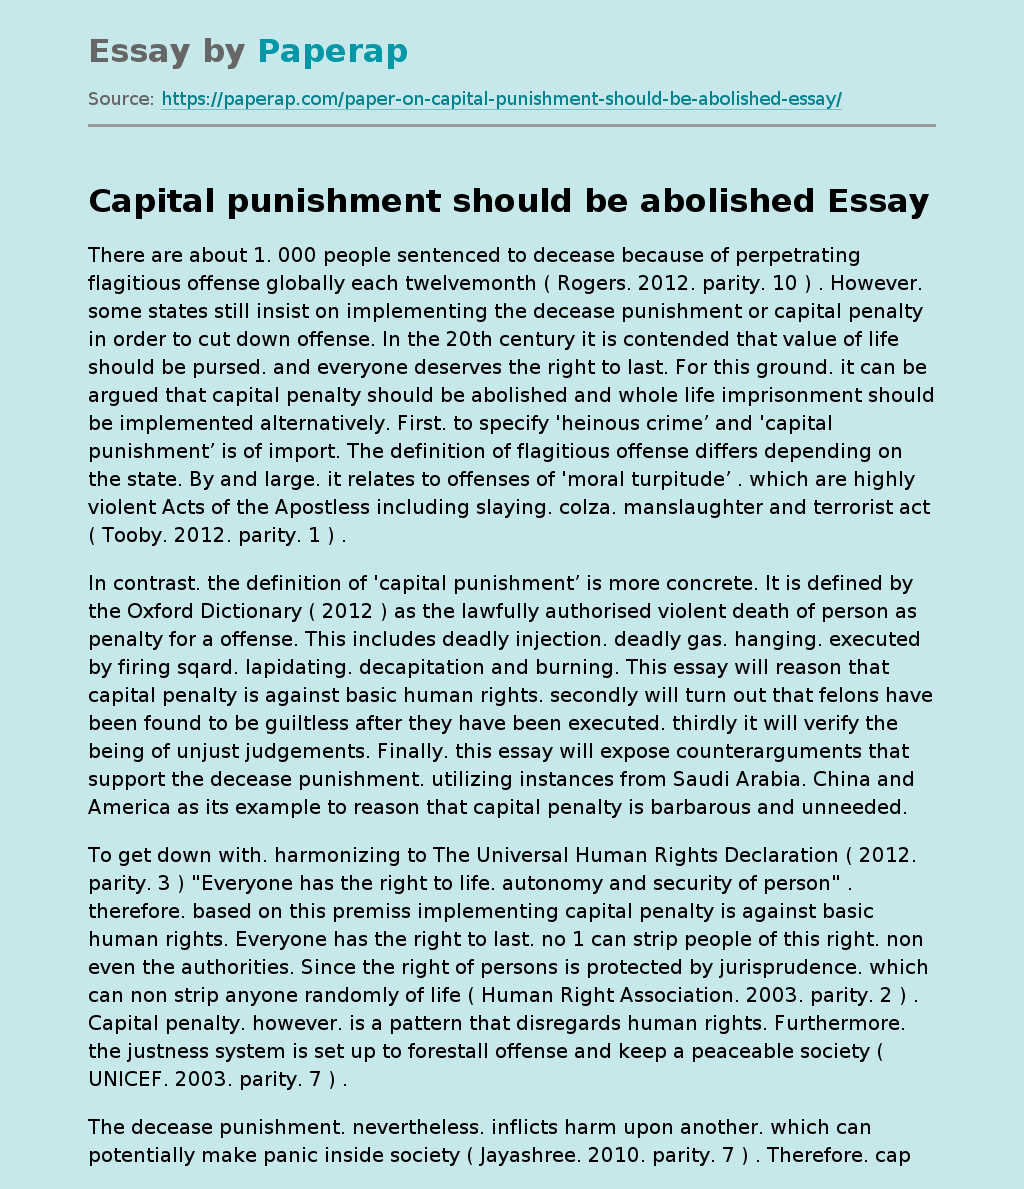 should capital punishment be abolished in india essay